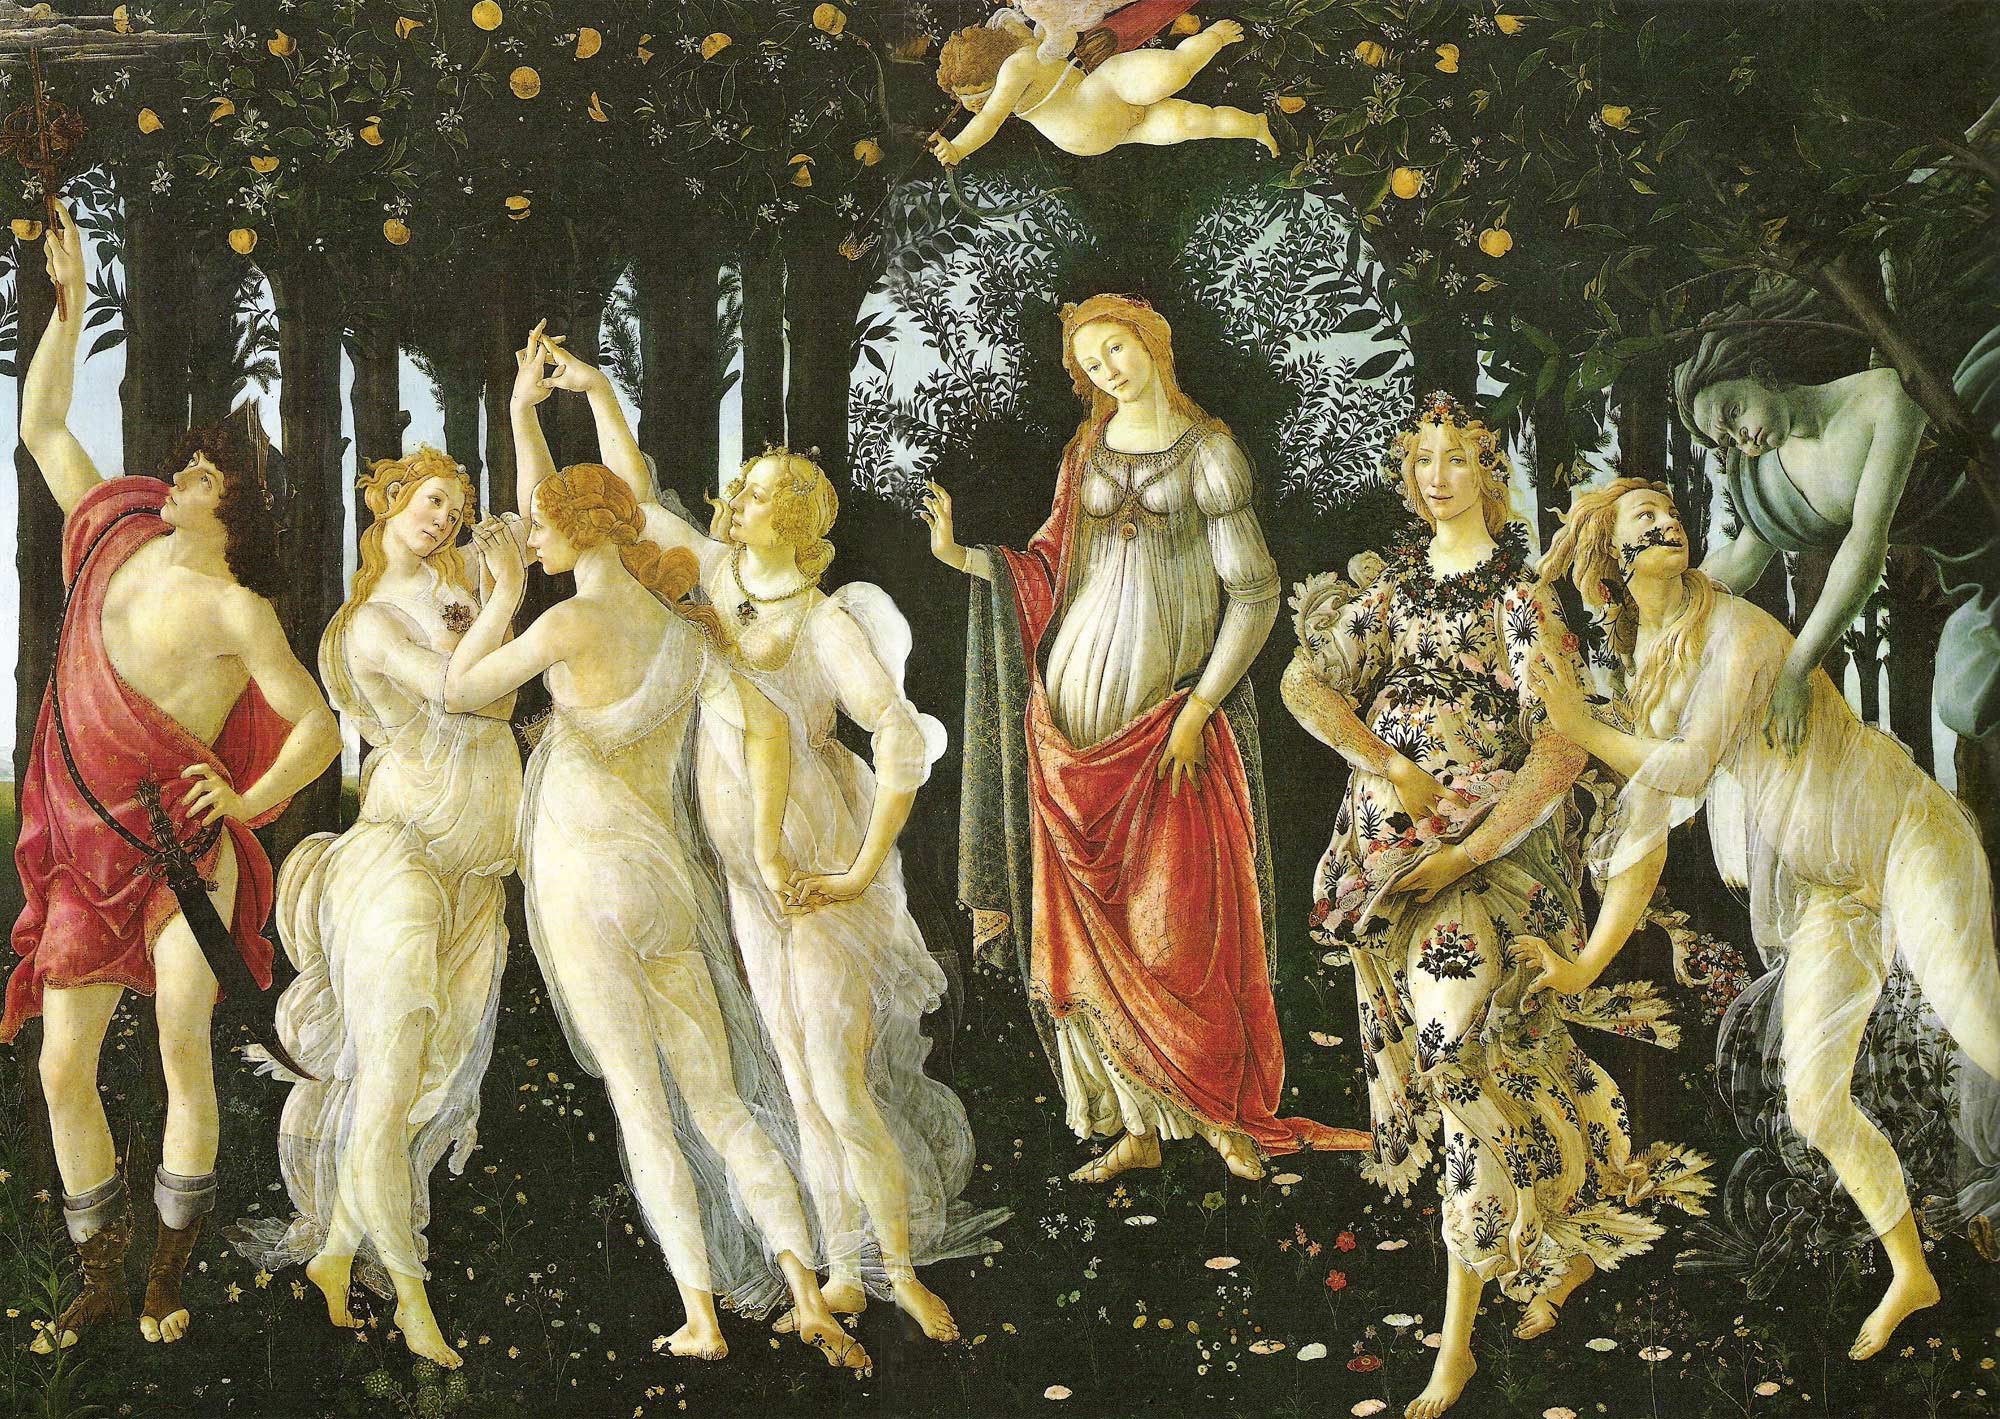 Primavera,1477 - Sandro Botticelli painting on canvas